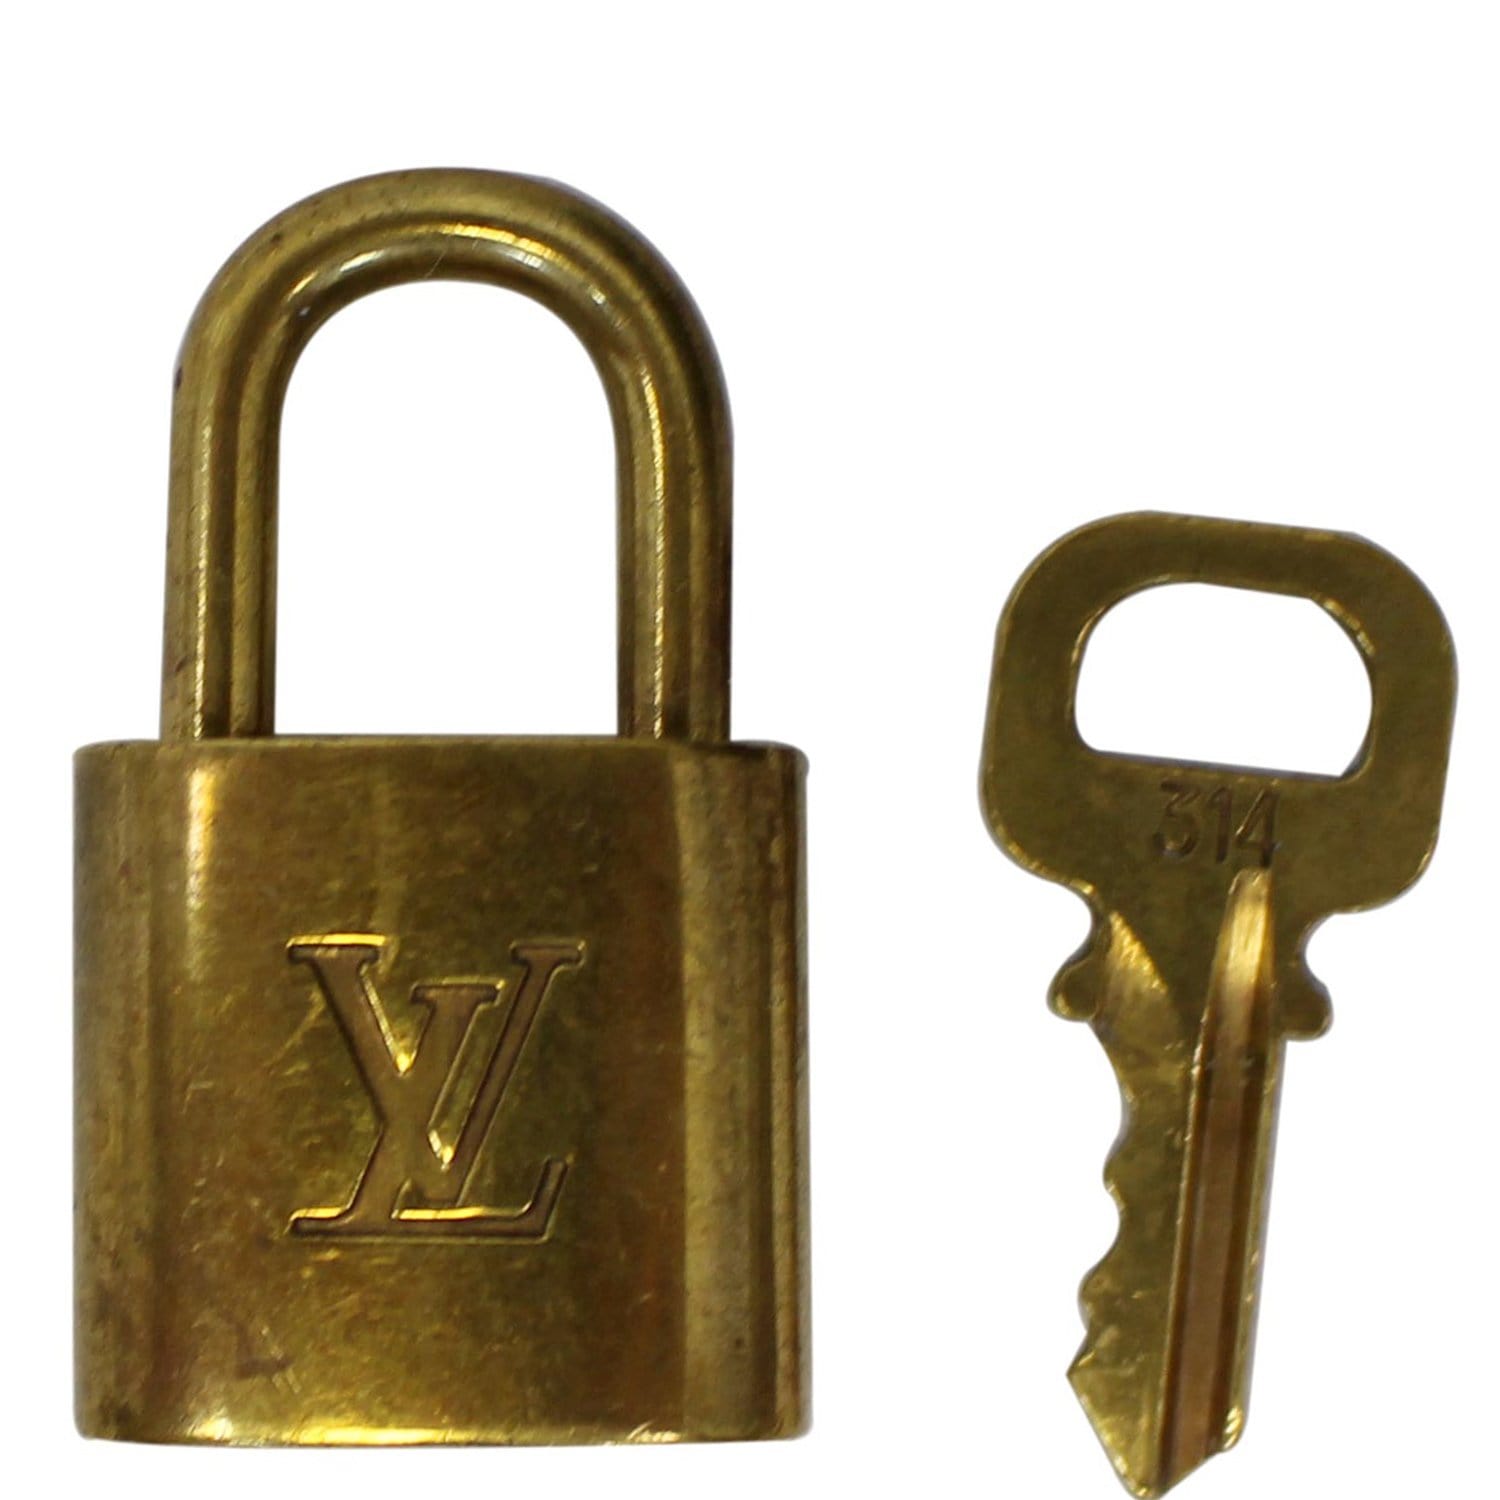 Louis Vuitton lock and key set#201 Gold - $76 - From Jennifer